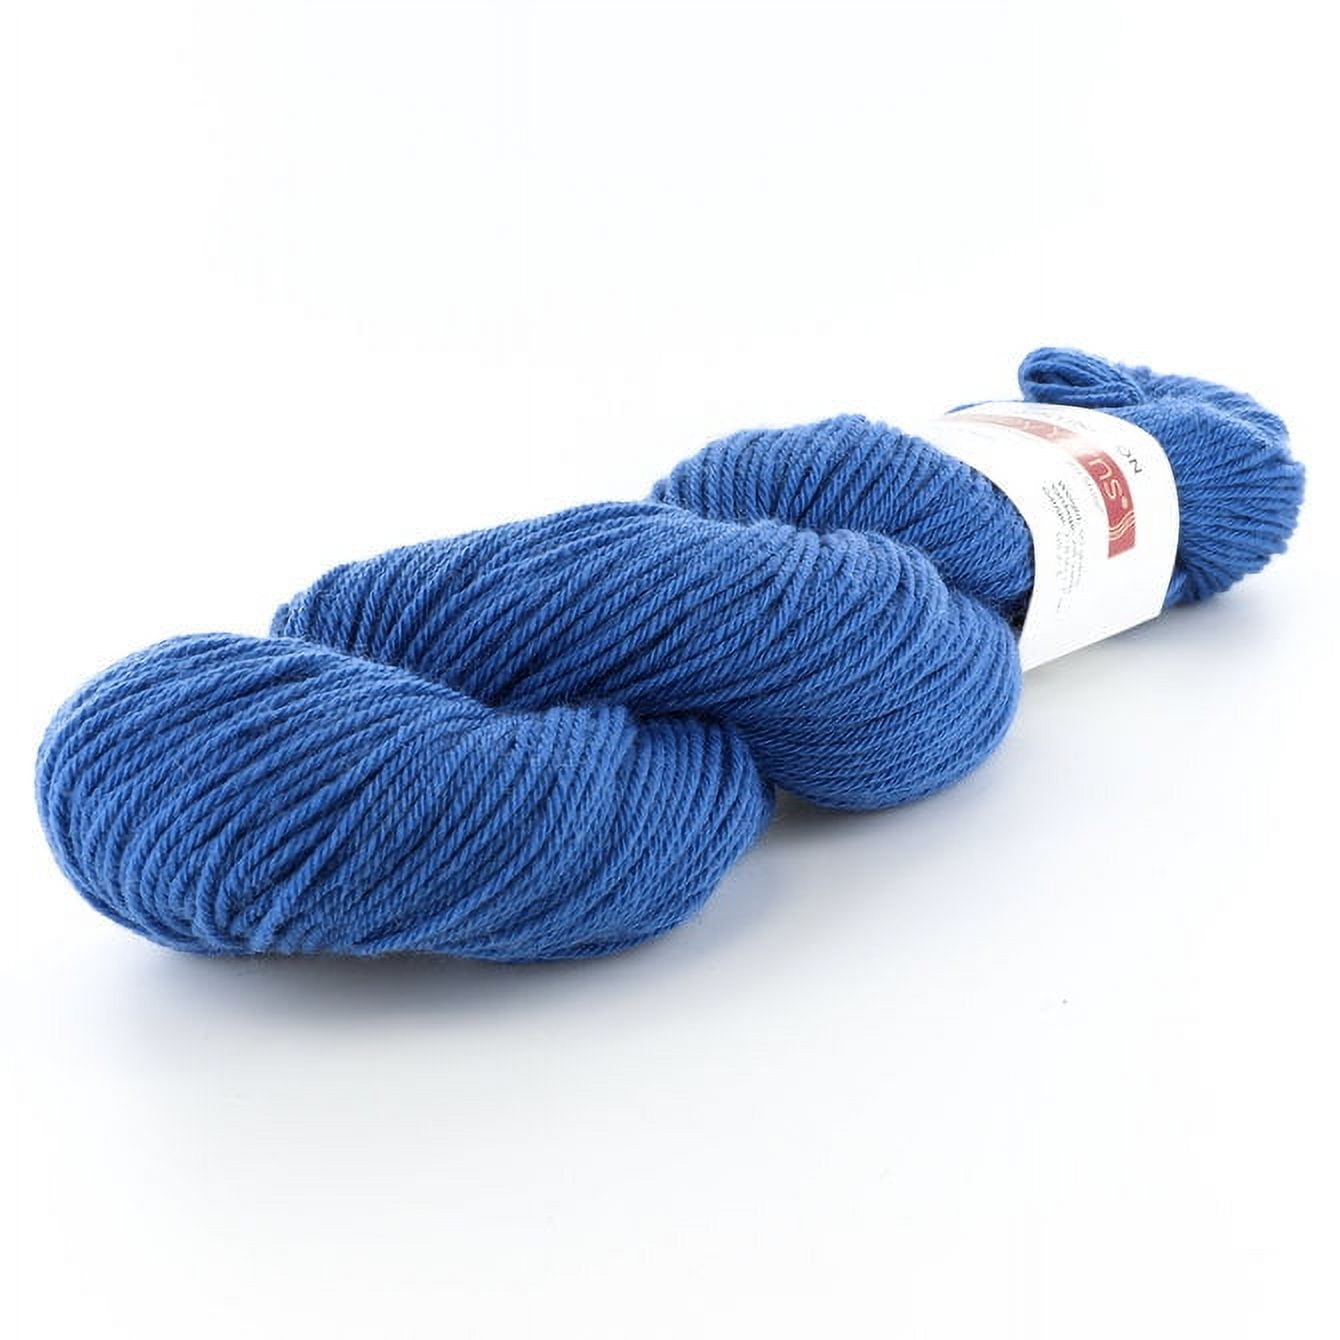 Hand Dyed Yarn, Superwash Merino Wool, Blue, Black, White, Fingering  Weight, Sport, DK, Worsted Weight Blue Jay 